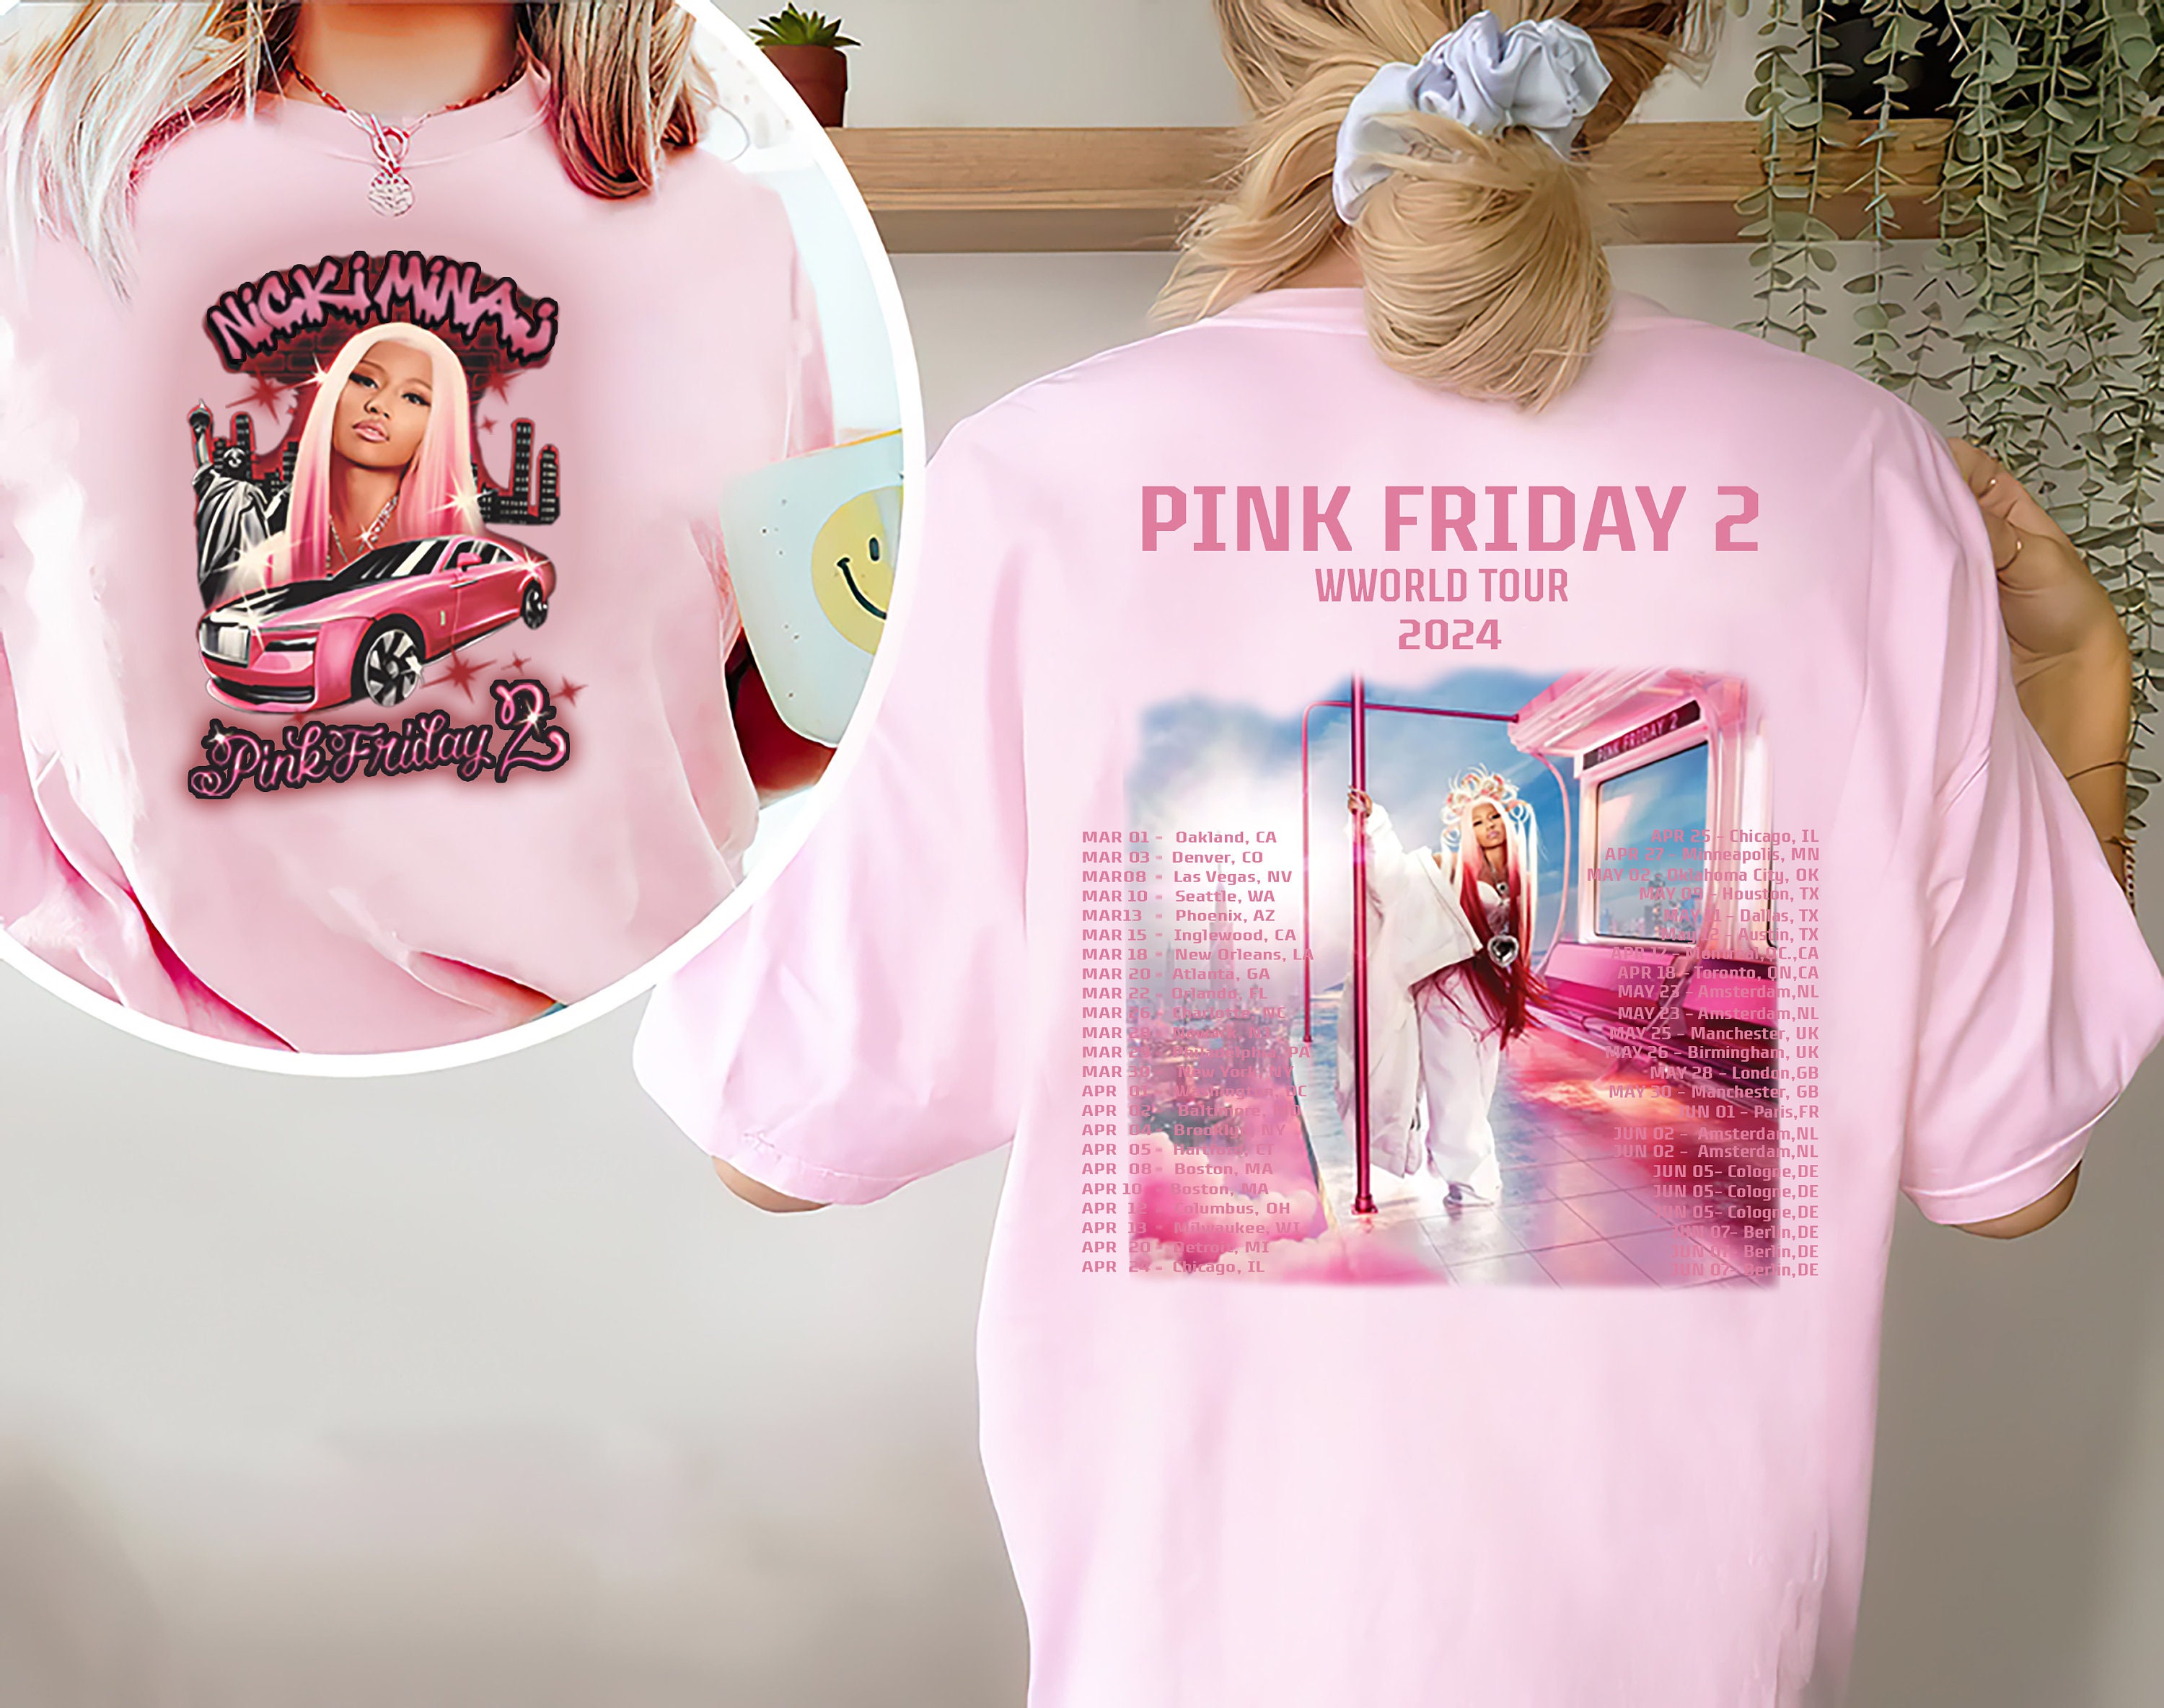 Vintage Nicki Minaj Pink Friday 2 Tour Shirt, Retro Nicki Minaj World Shirt